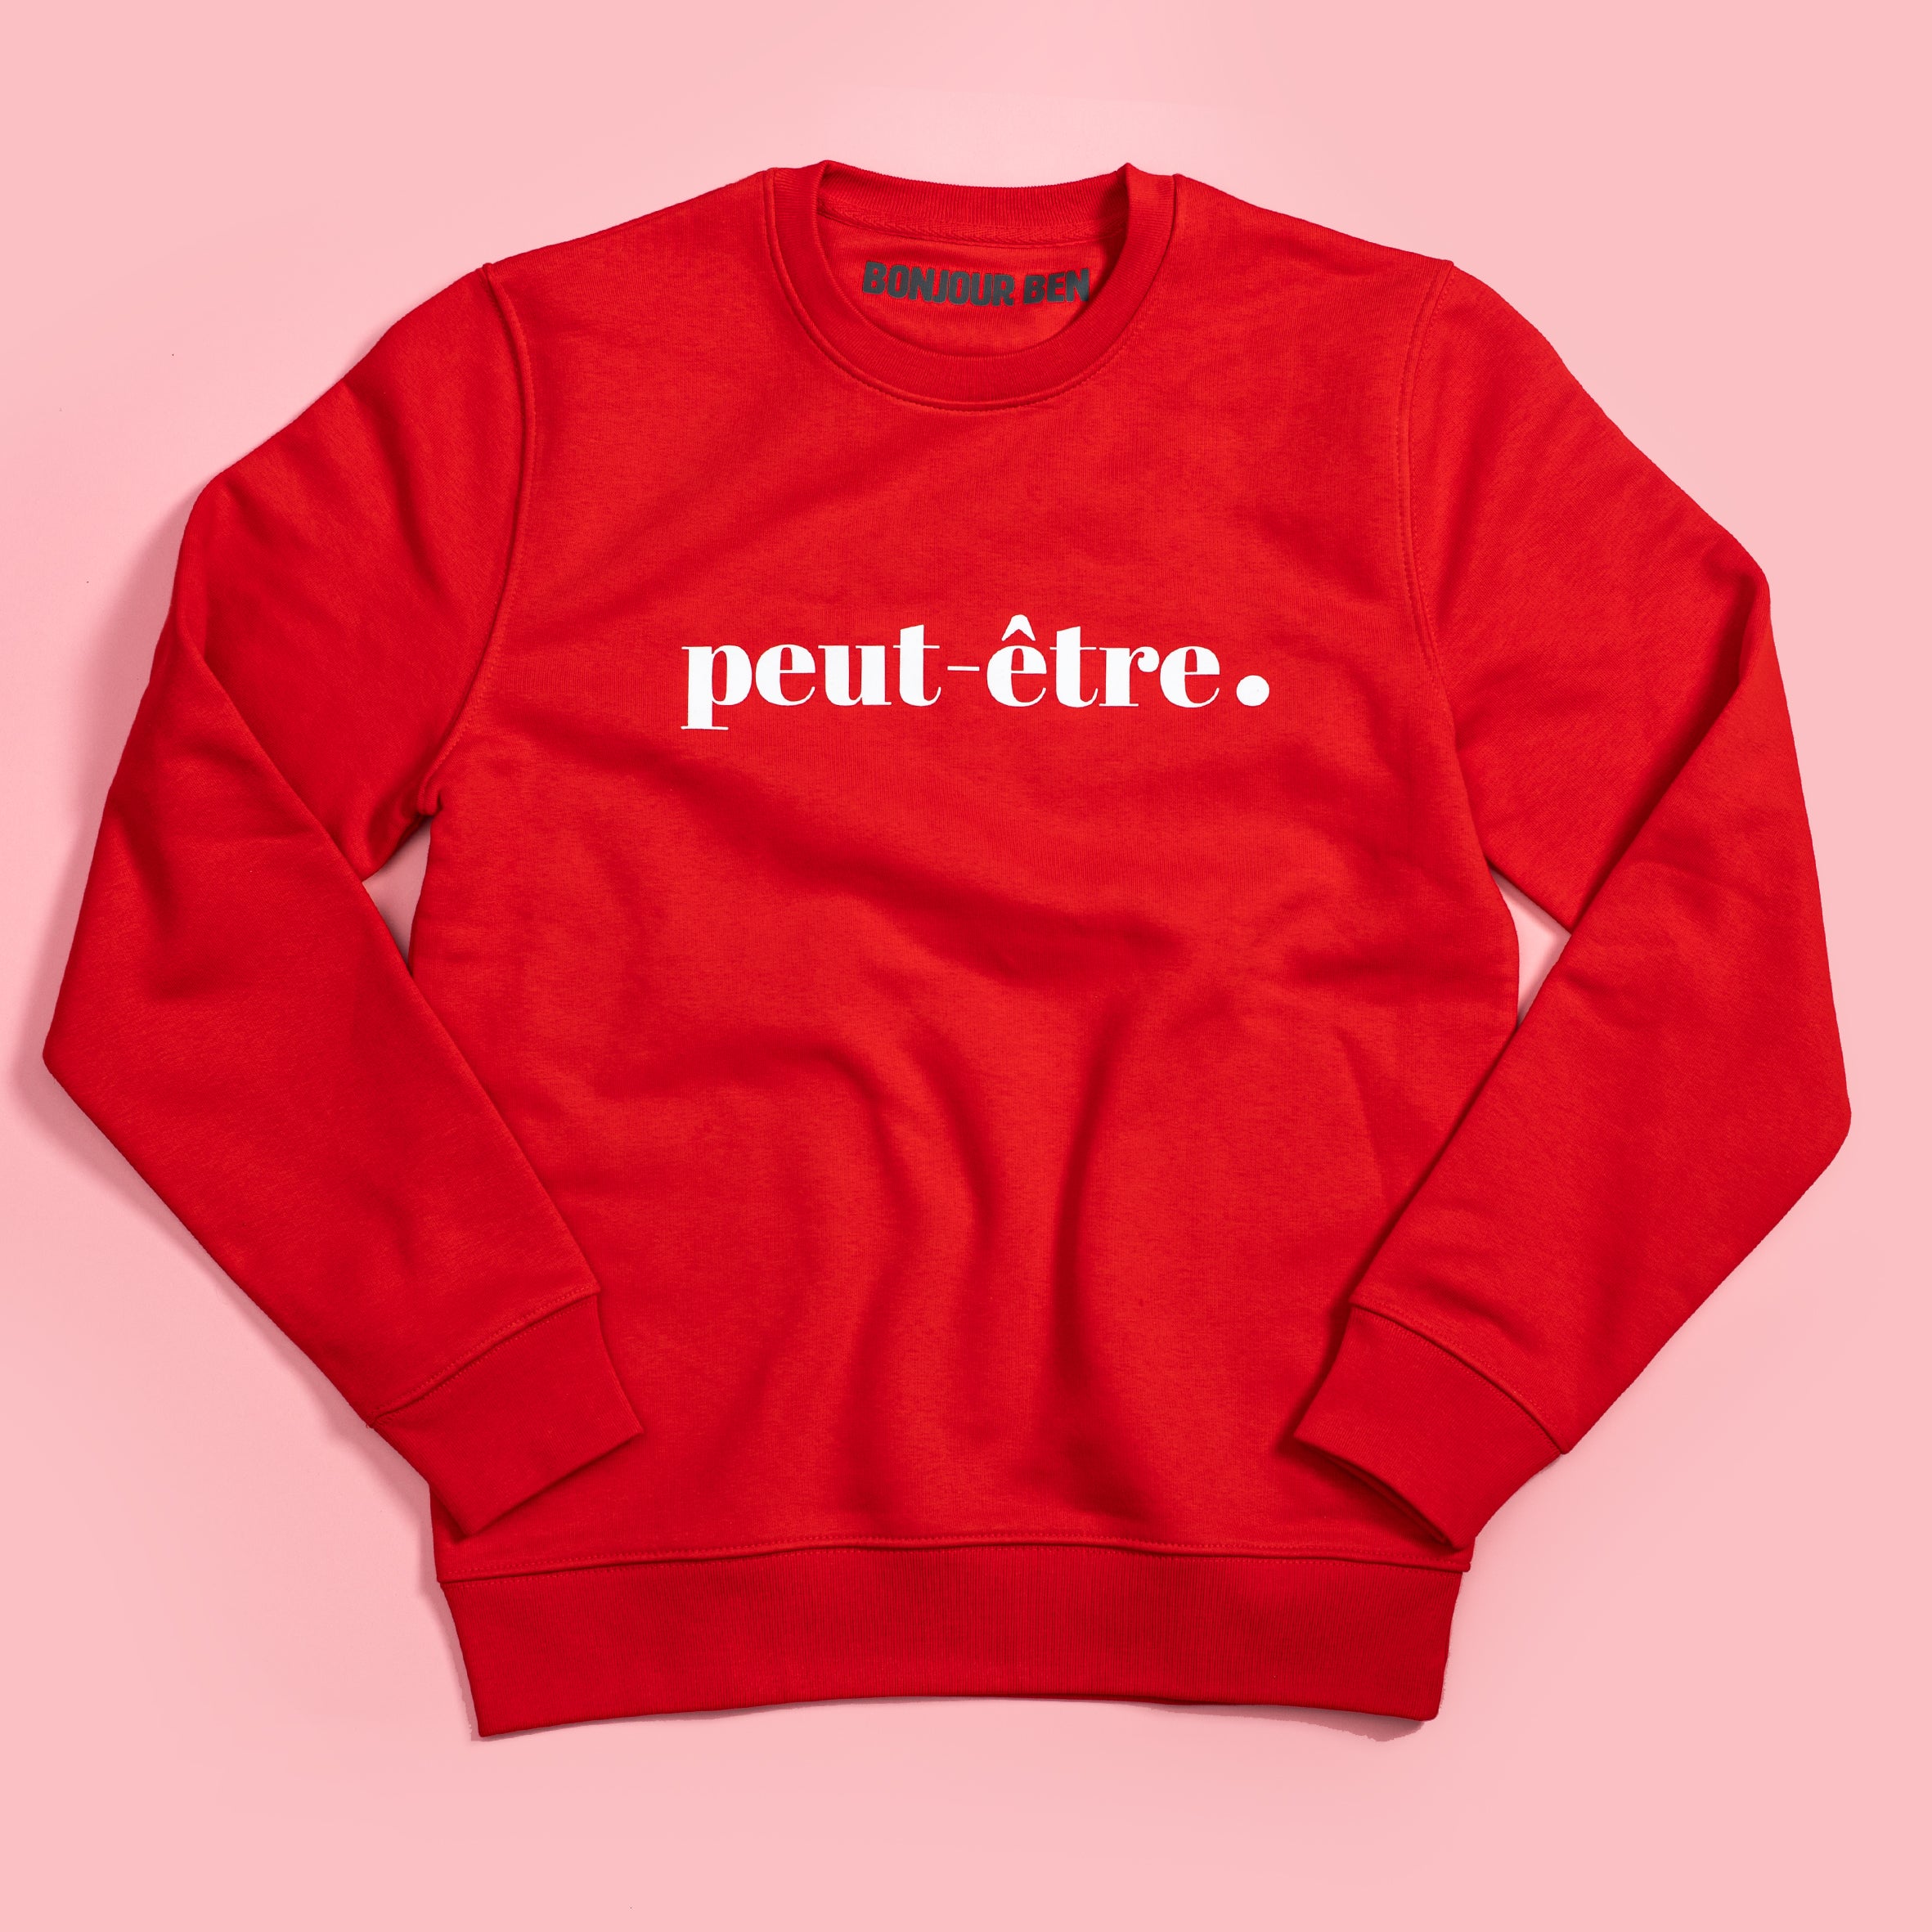 Peut-Être Sweatshirt - Rot/Weiß